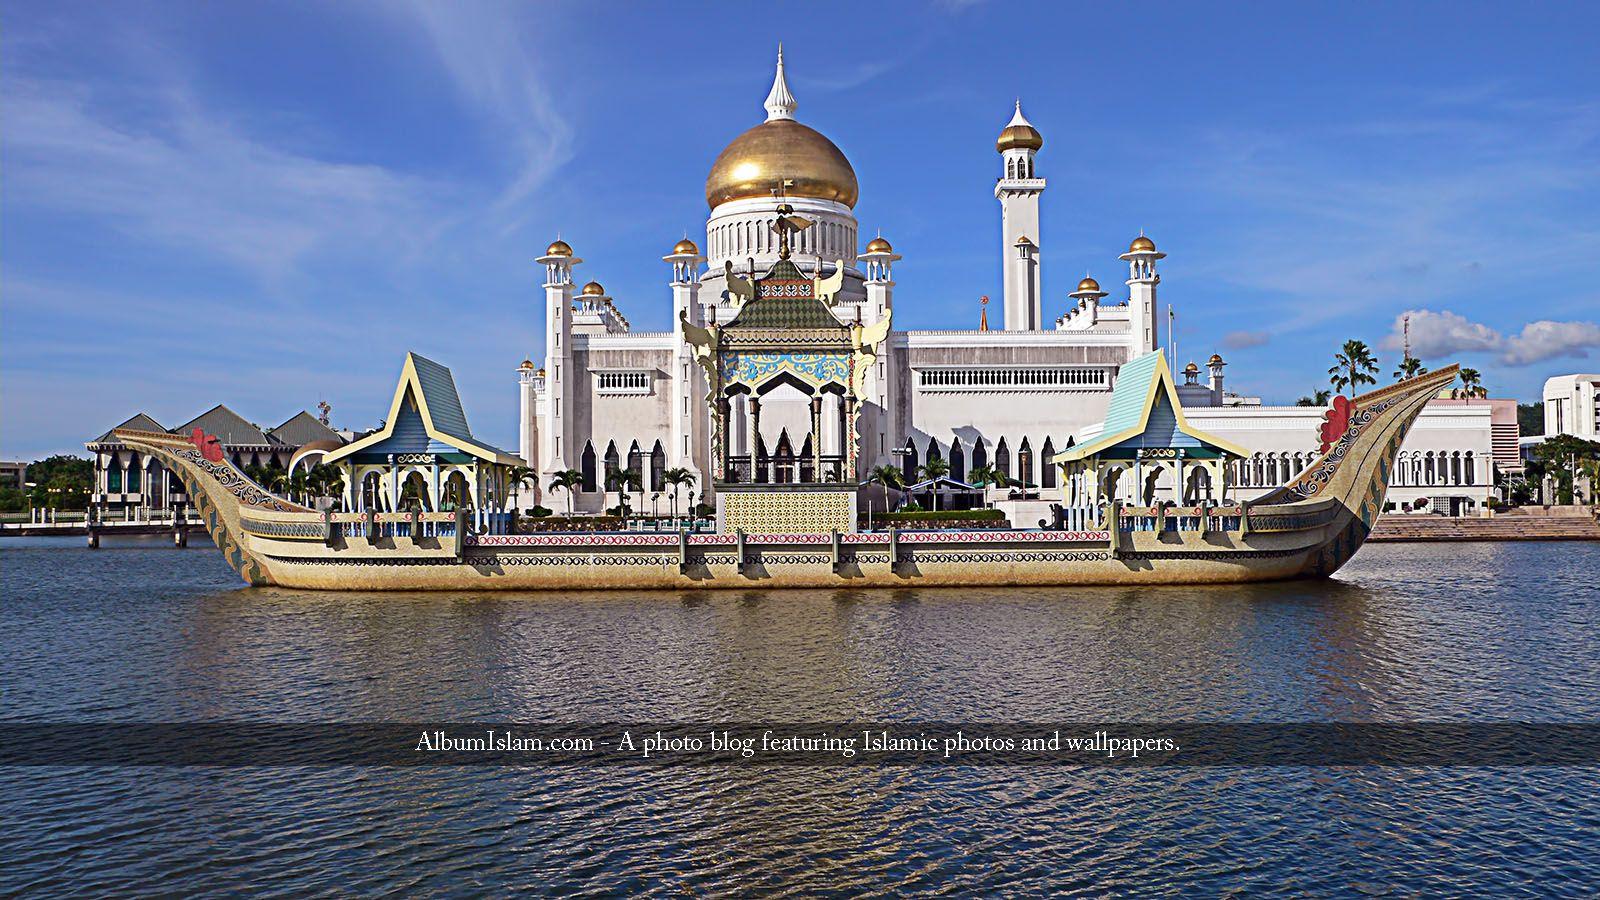 Album Islam: Sultan Omar Ali Saifuddin Mosque (Brunei)